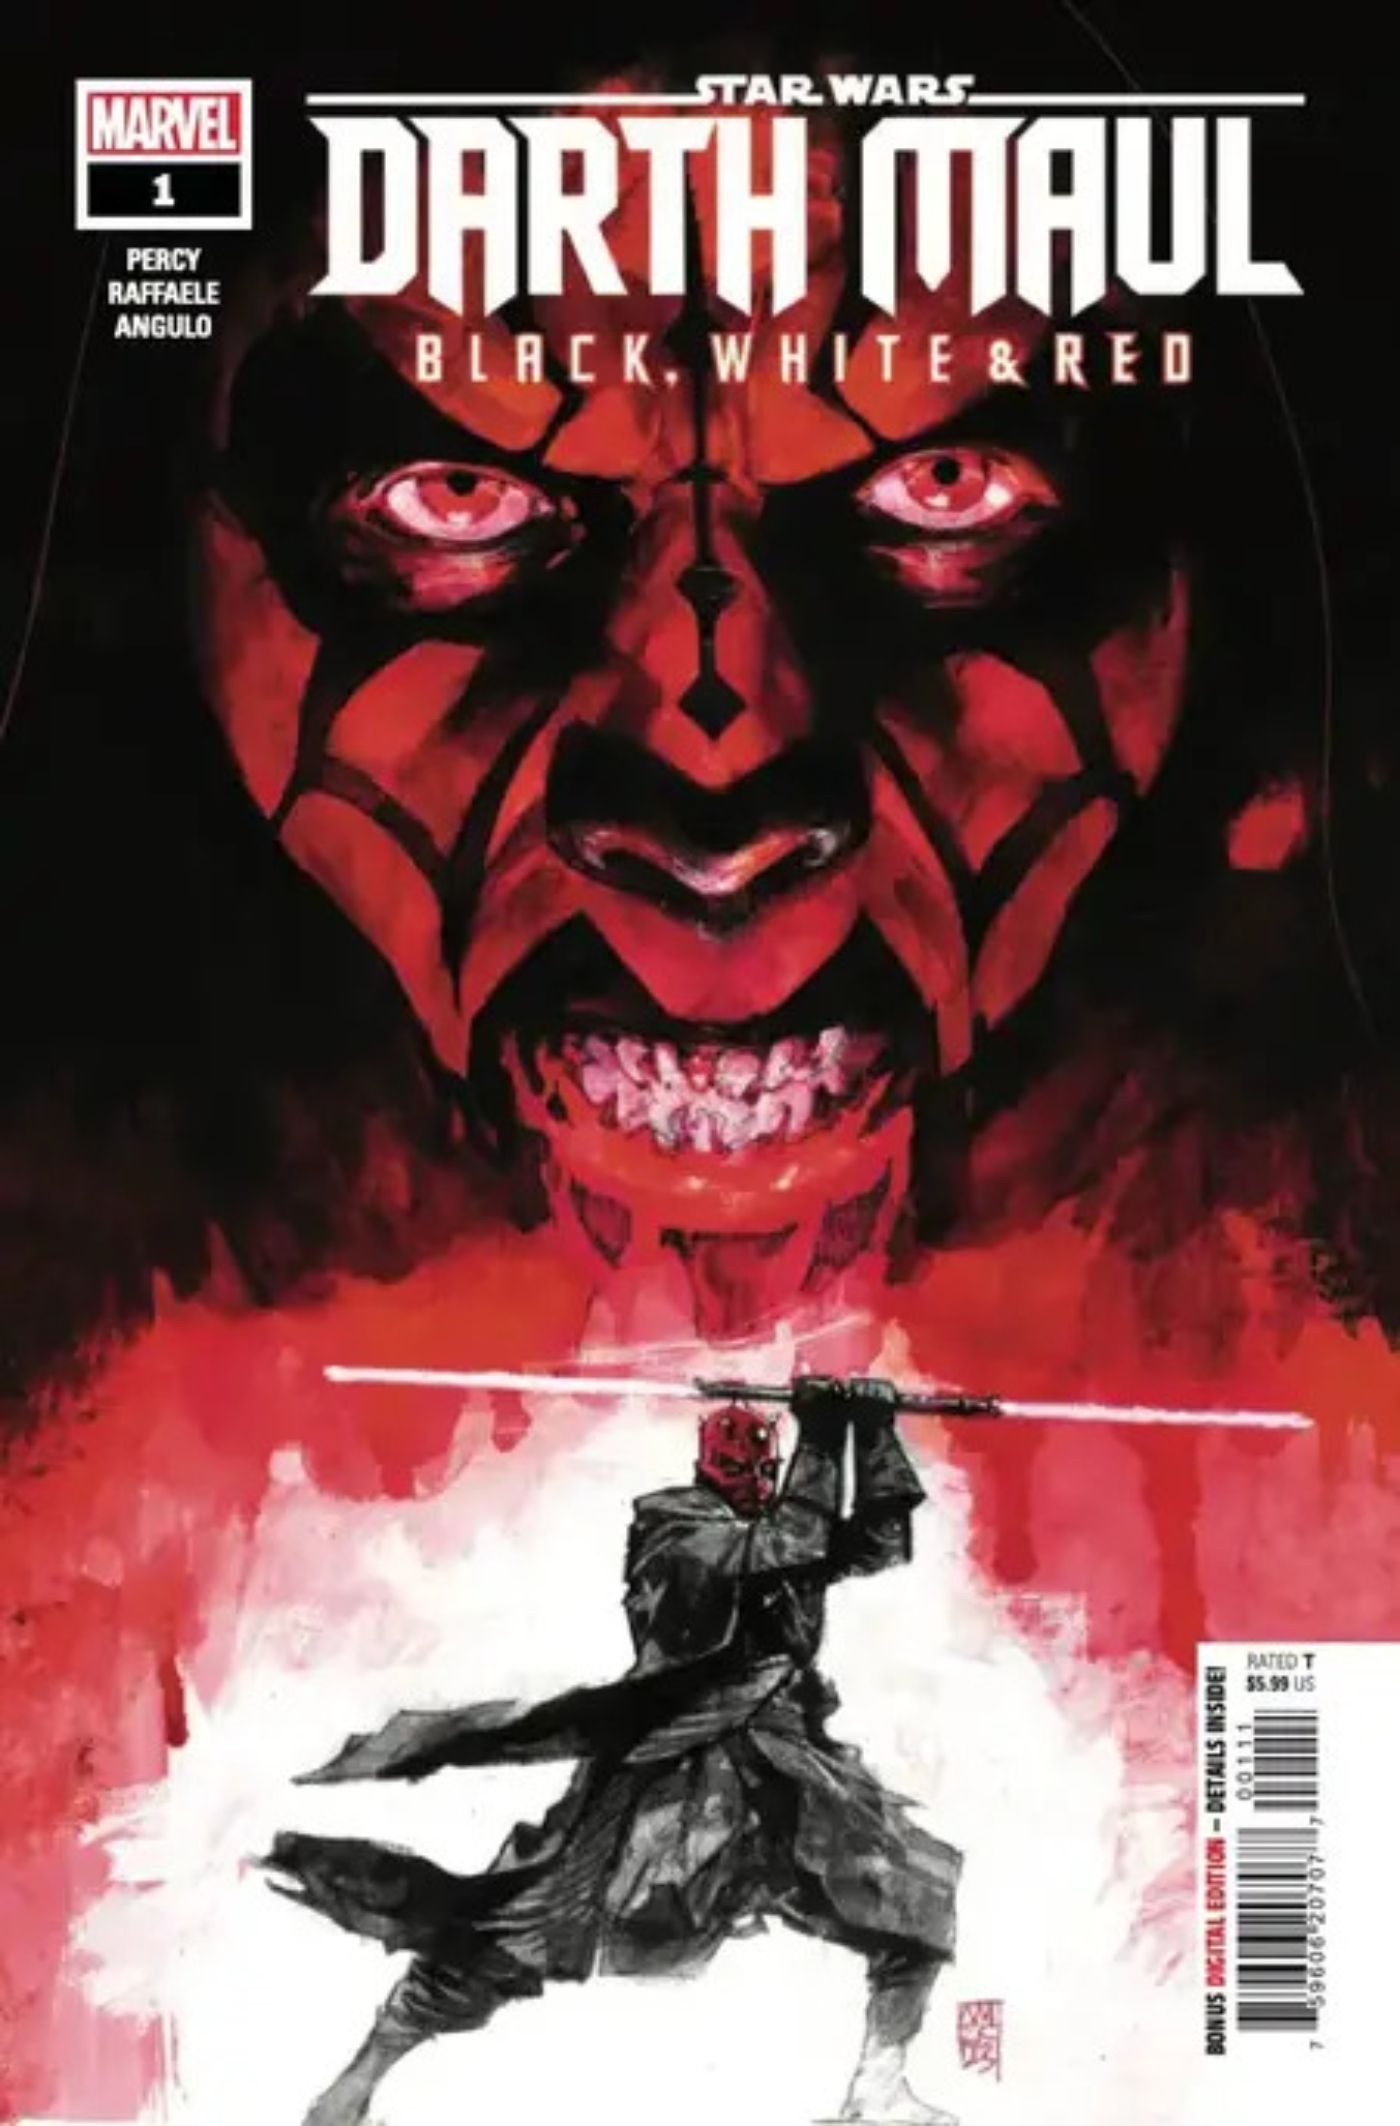 Cover of Star Wars: Darth Maul - Black, White & Red featuring Darth Maul.